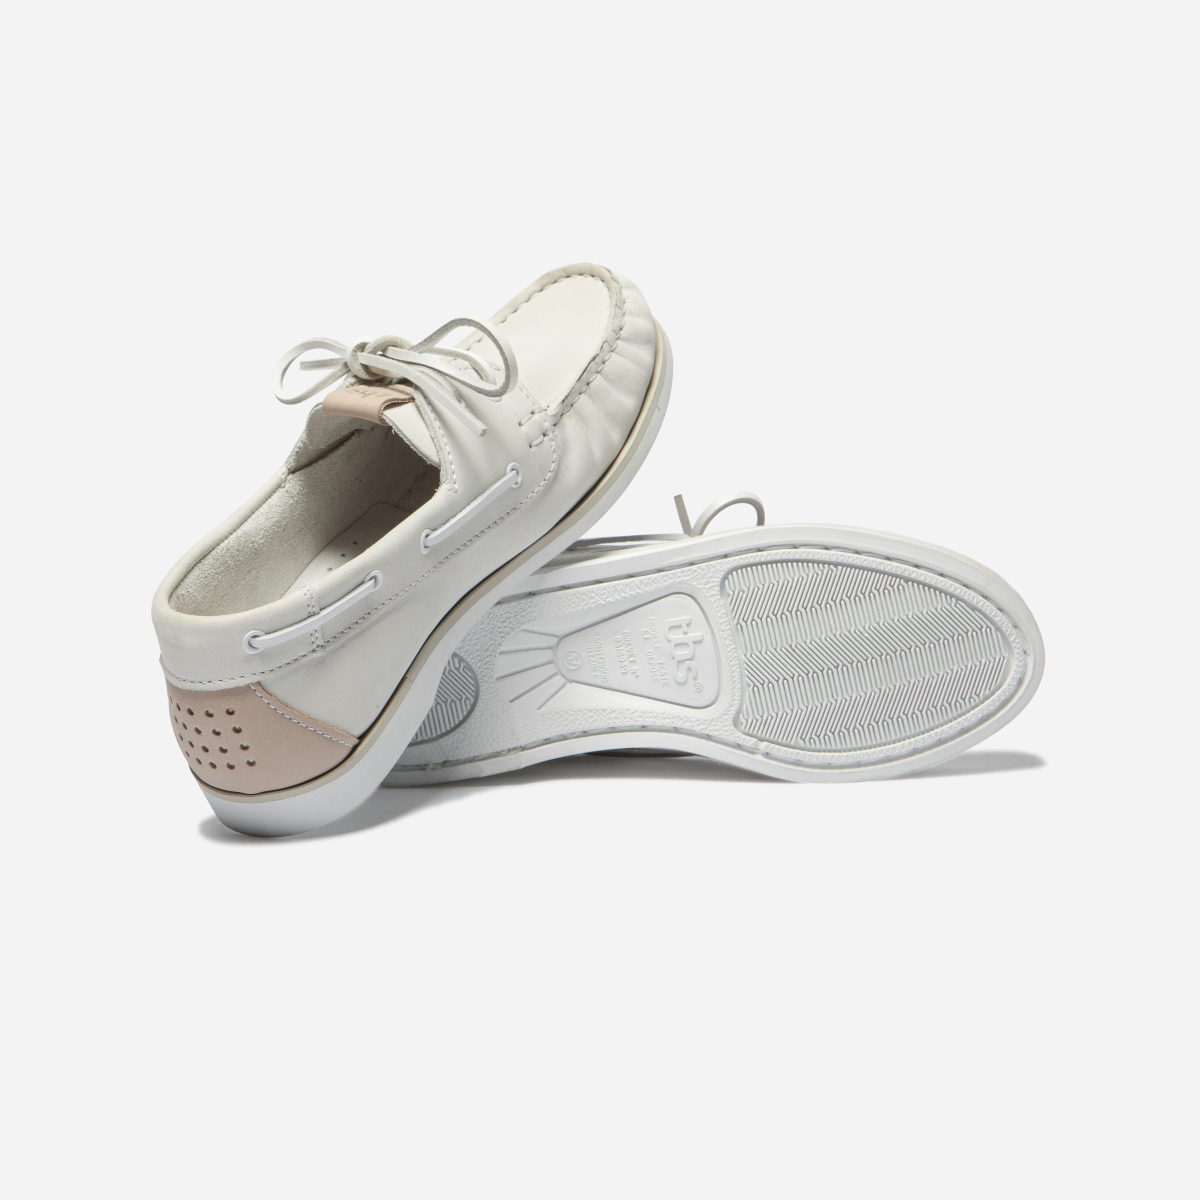 TBS Palmela chaussure bateau, femme - blanc crème, pointure 37